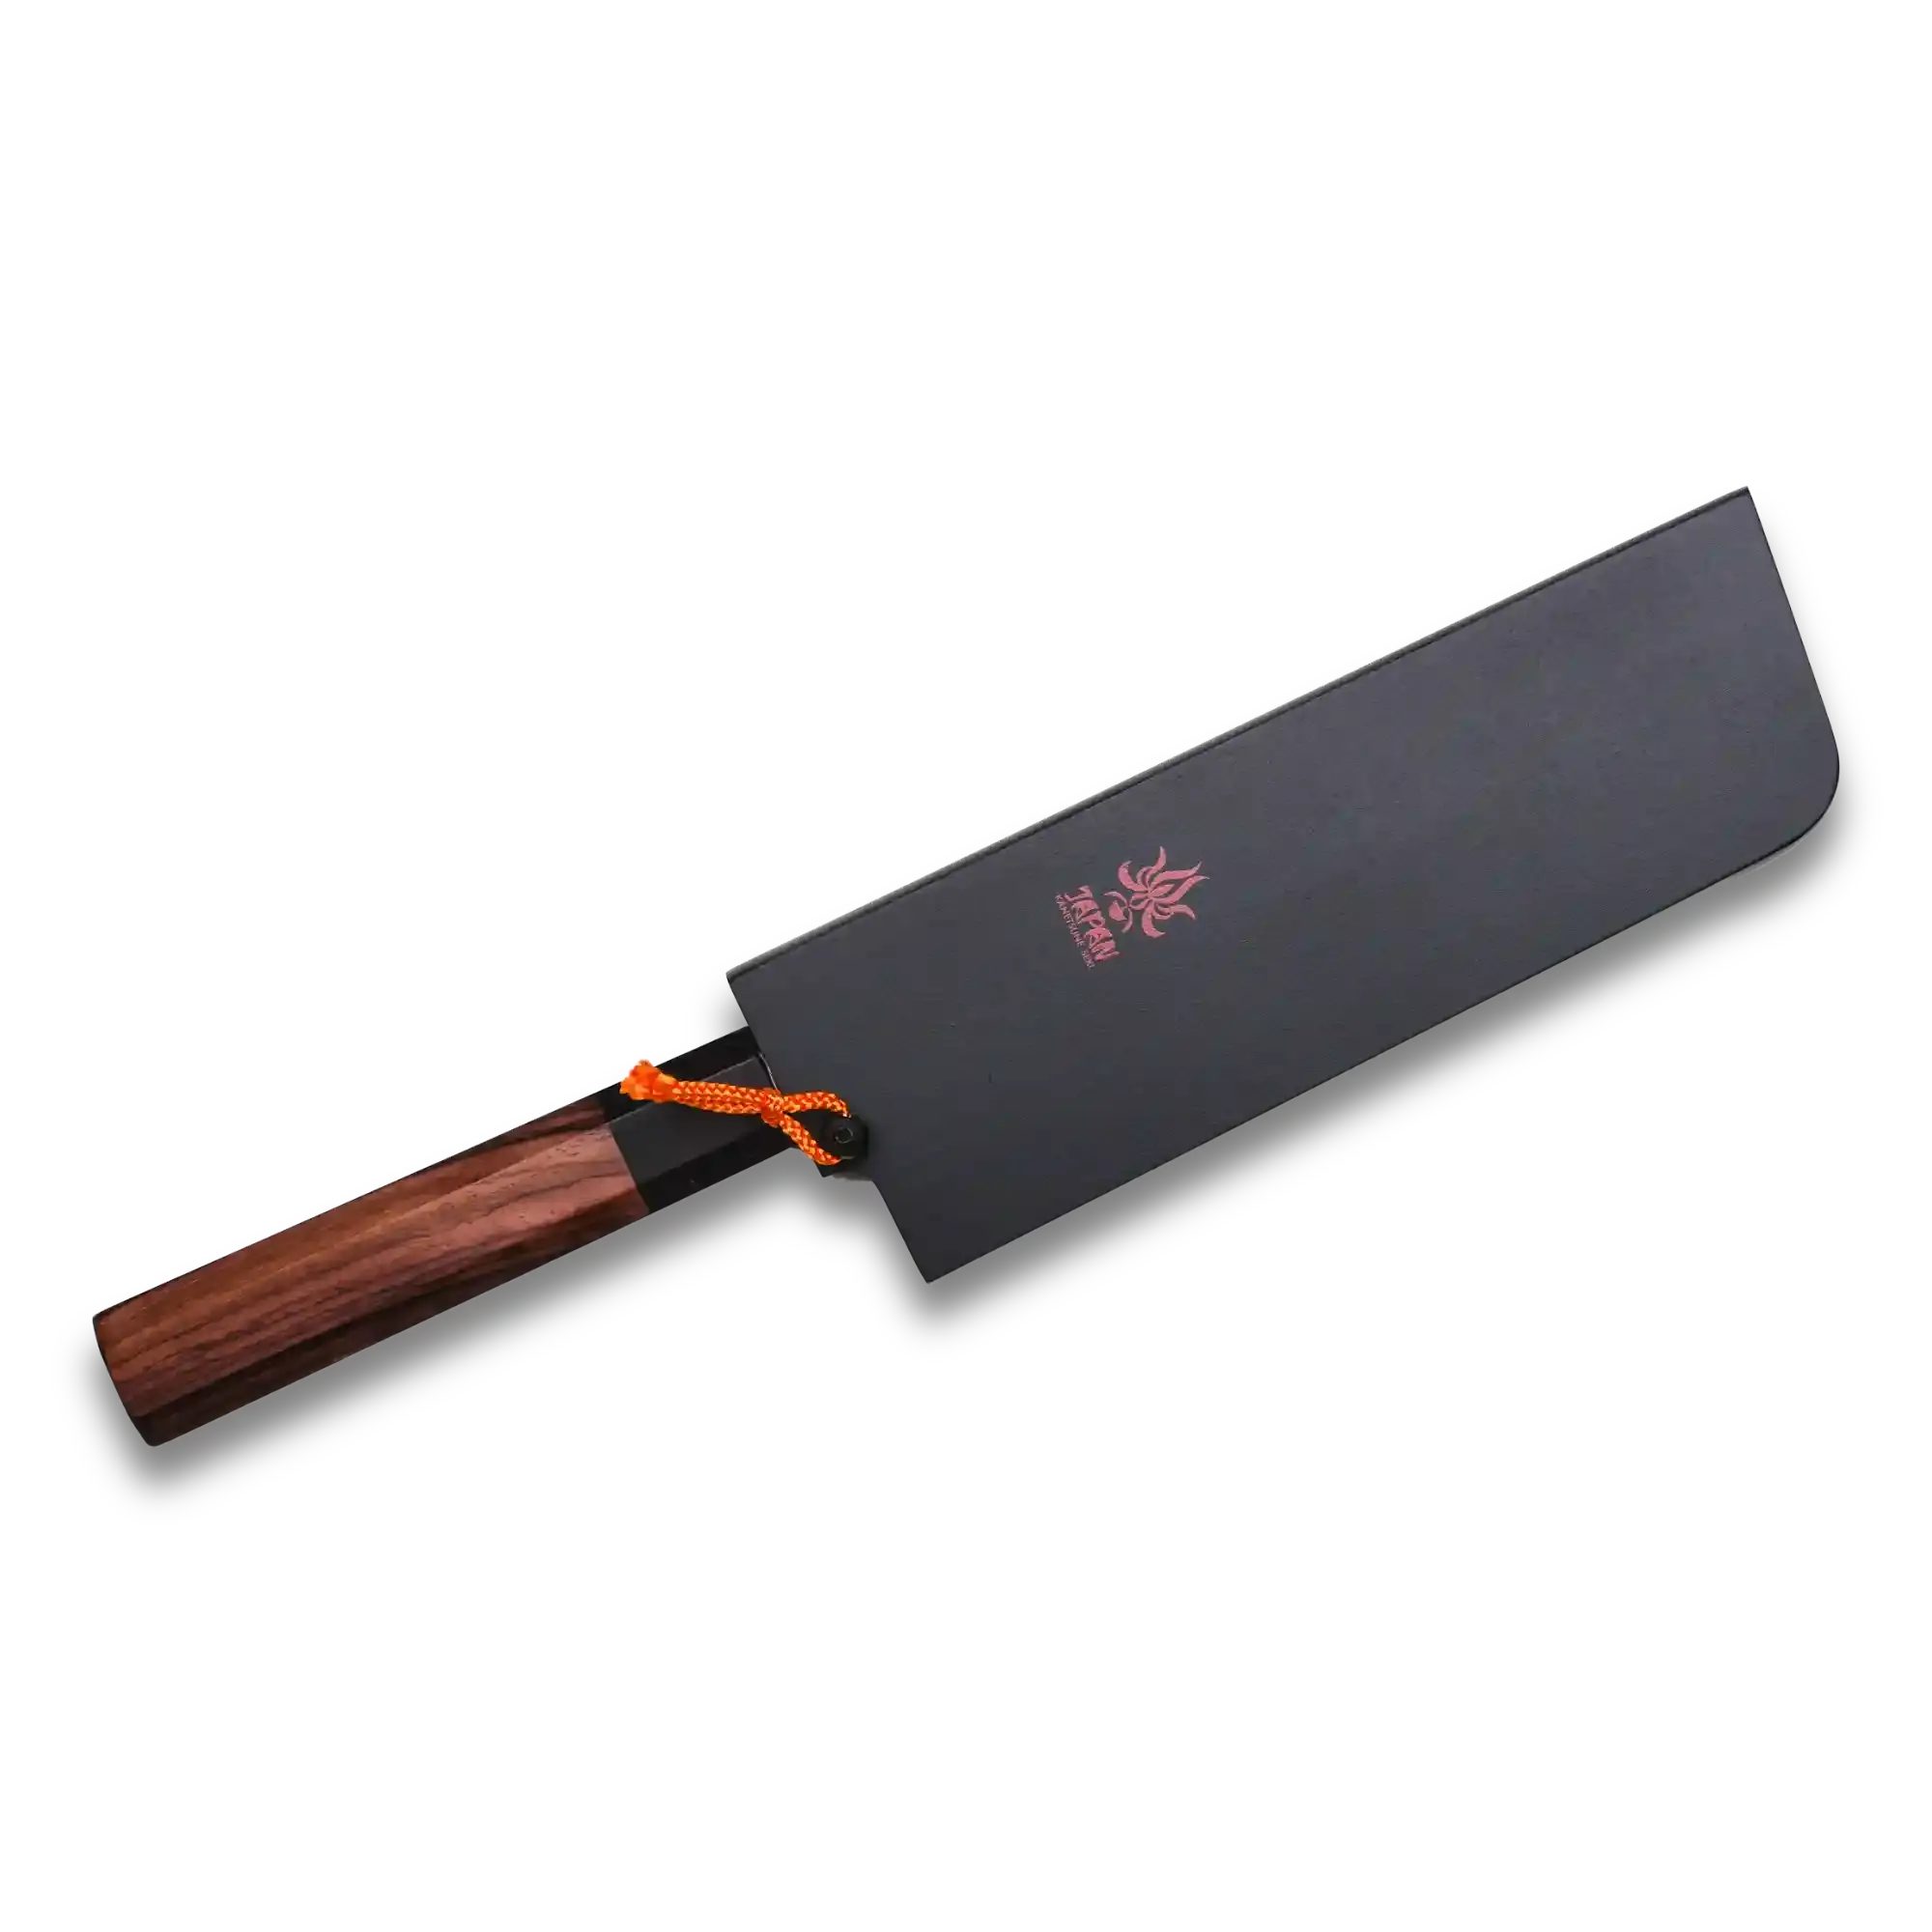 Sheath / Saya Ho Wood (Magnolia) - For Nakiri 165mm Knife